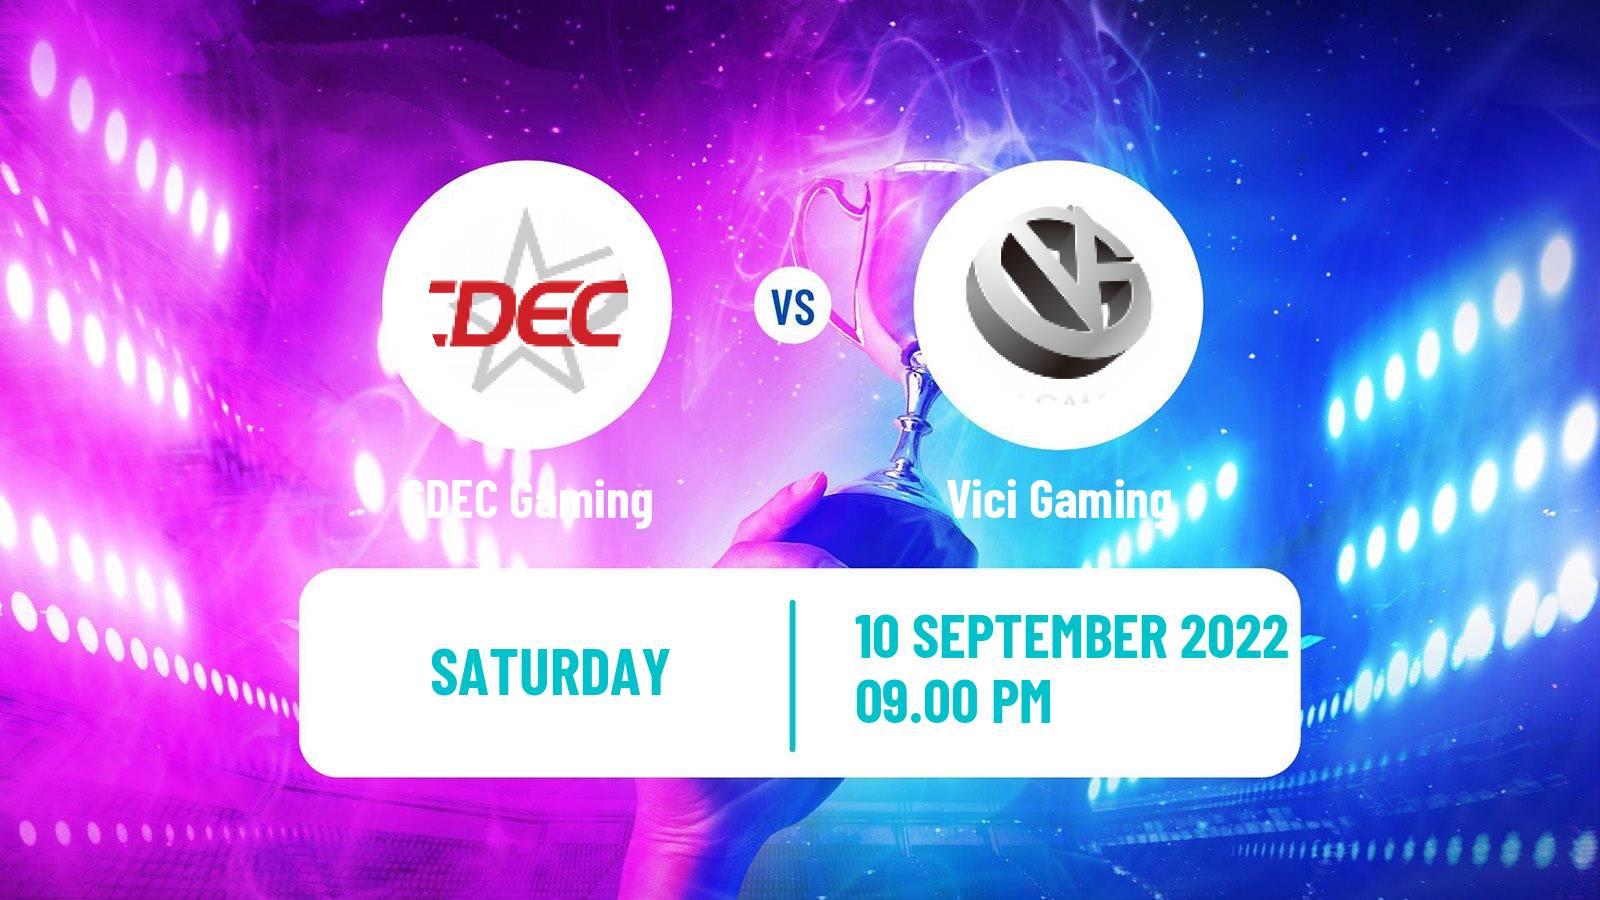 Esports eSports CDEC Gaming - Vici Gaming